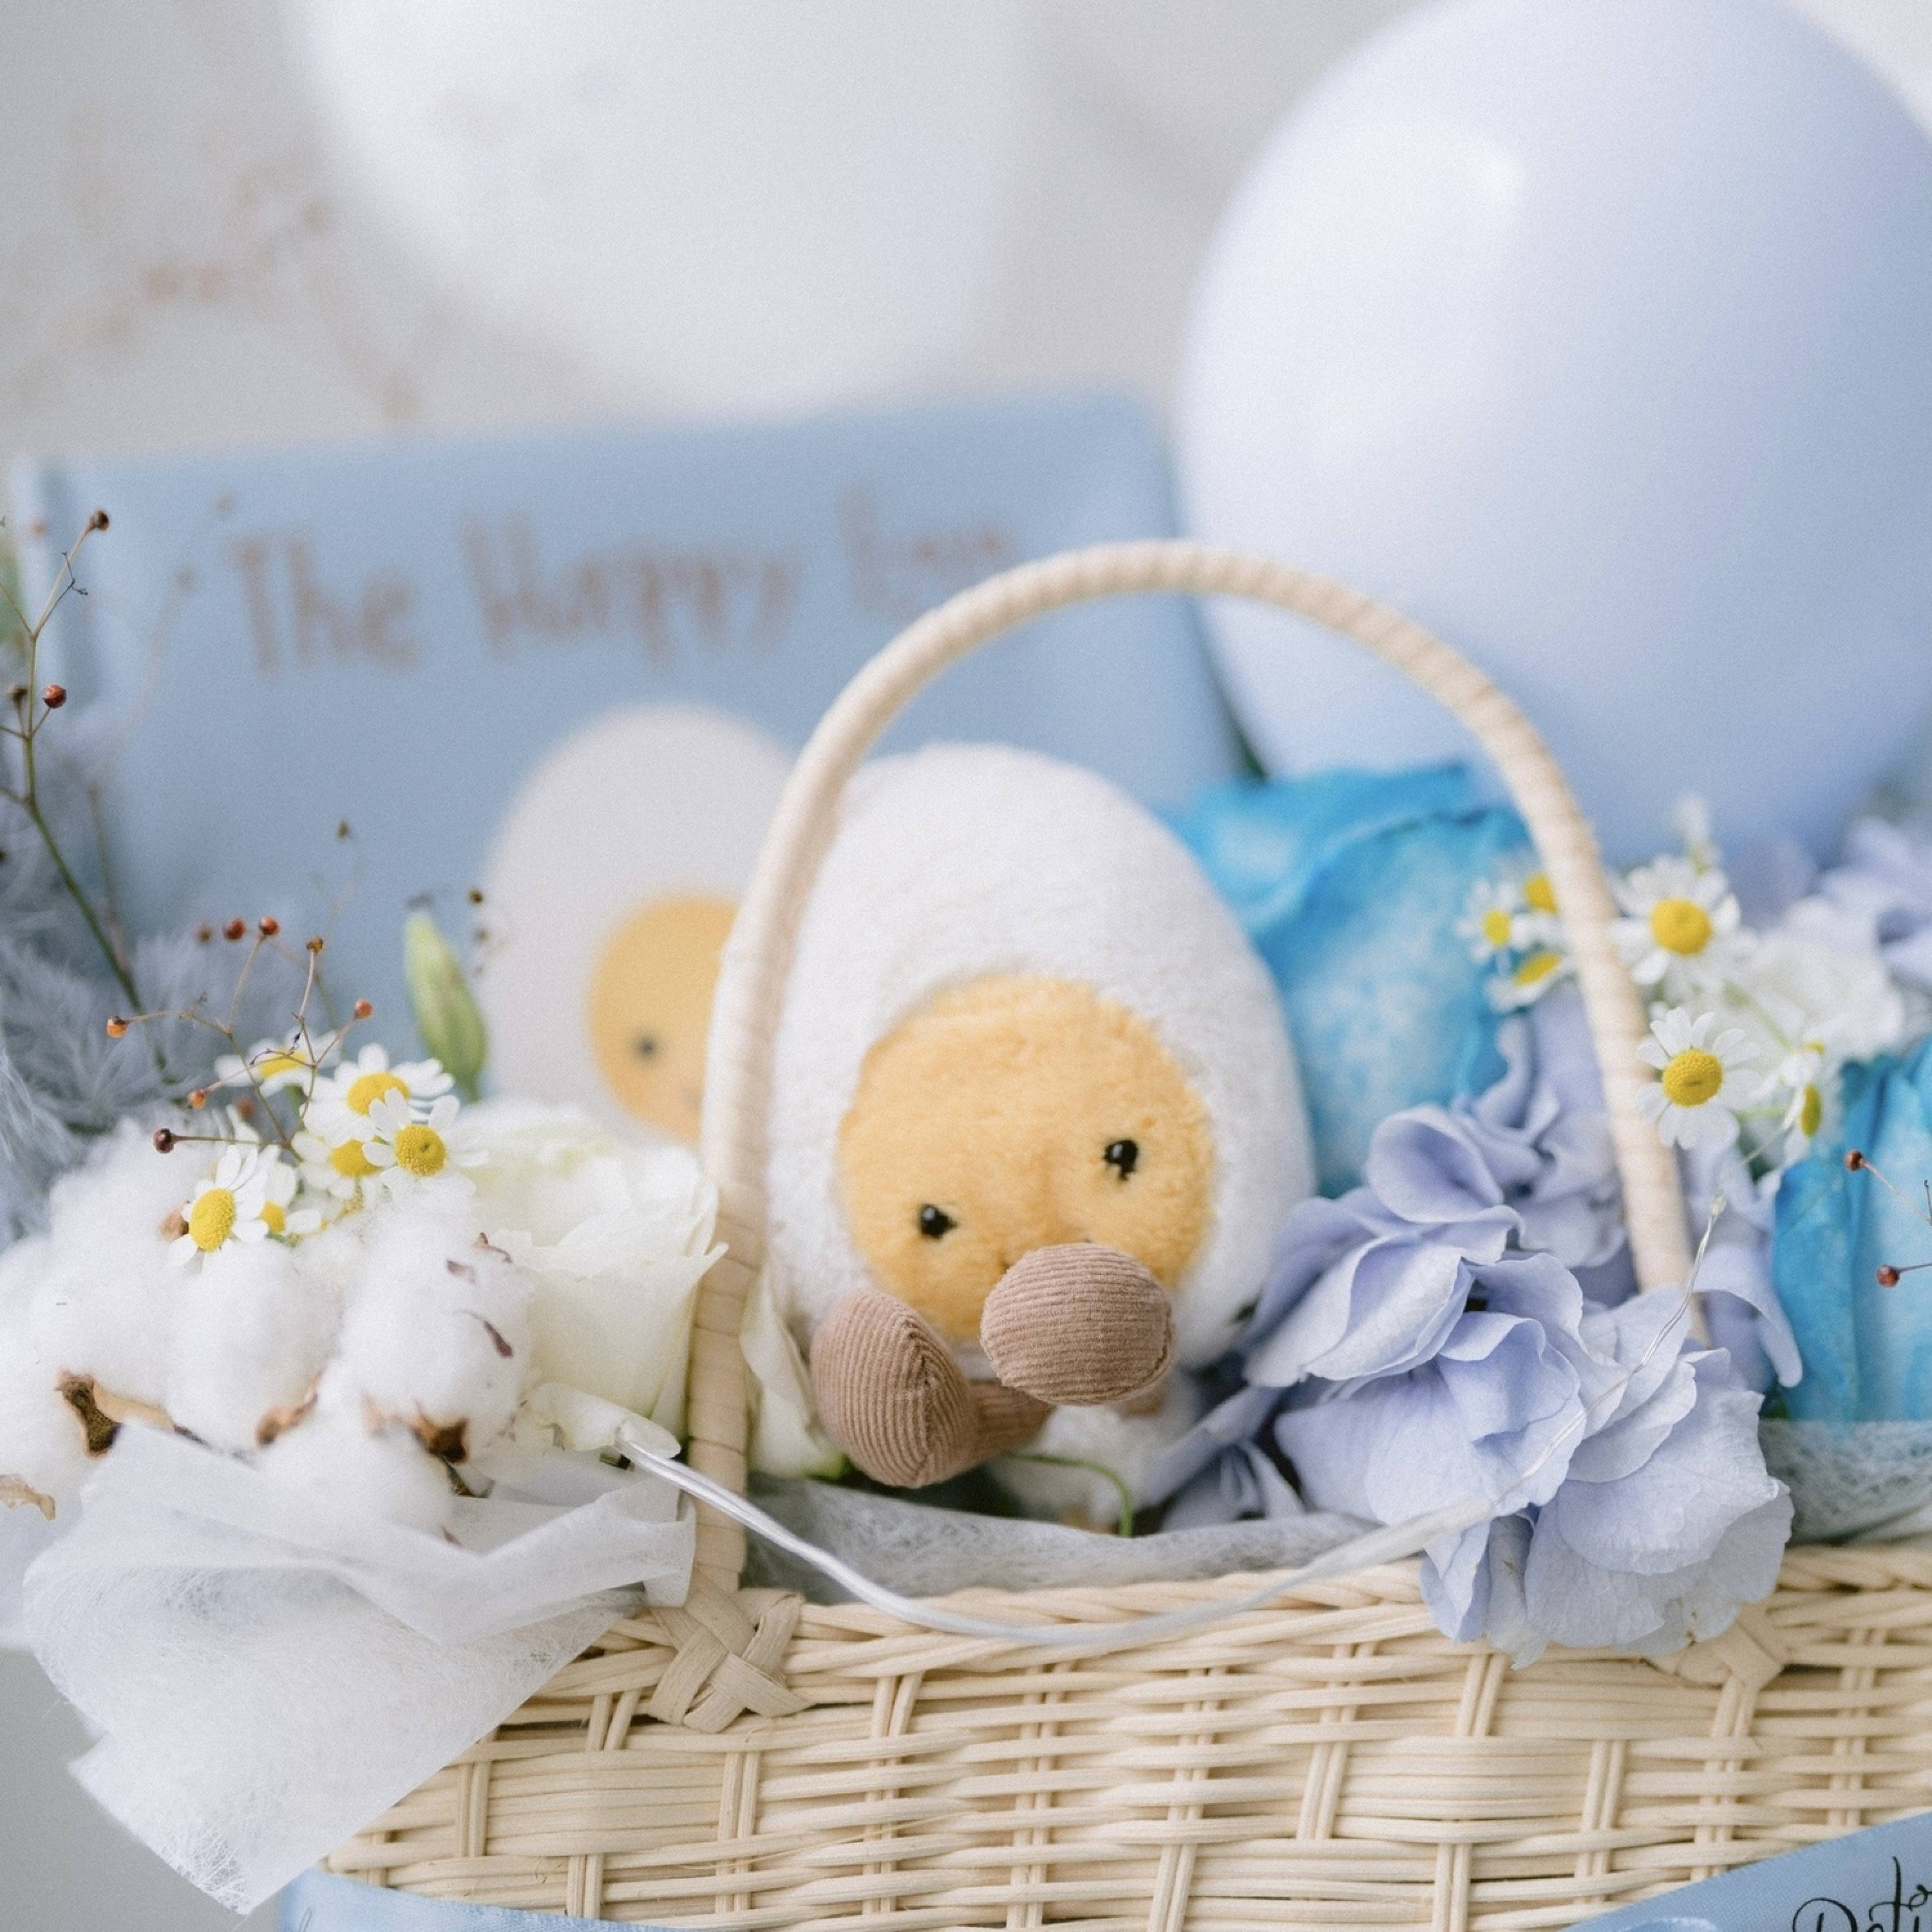 The Happy Egg Baby Gift Set